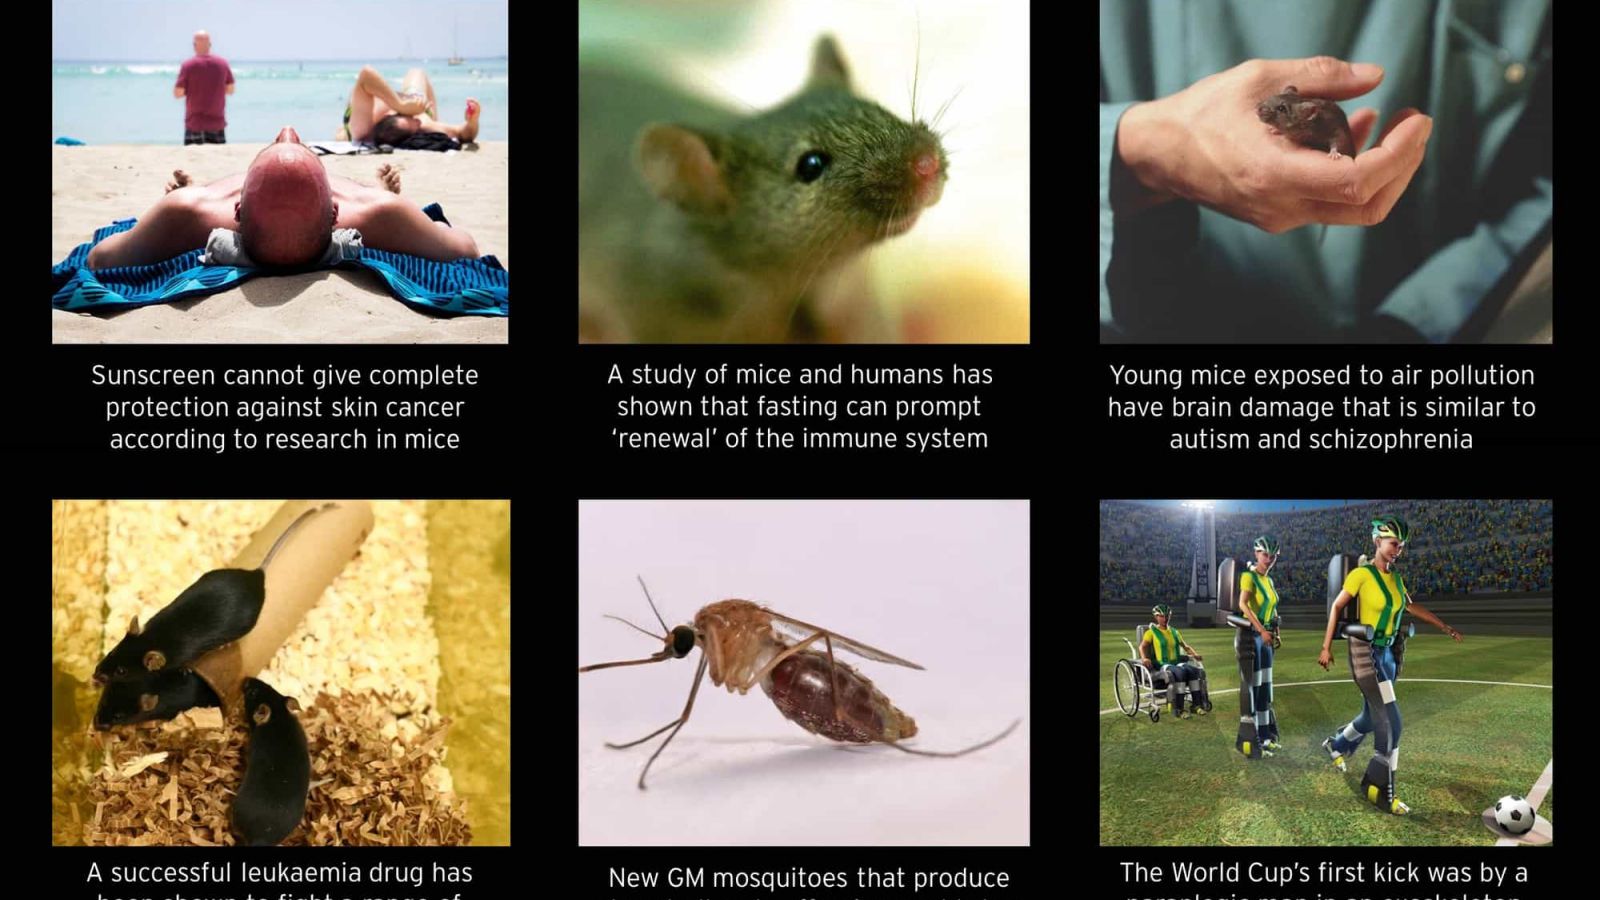 GM mosquitos used to reduce wild mosquito population